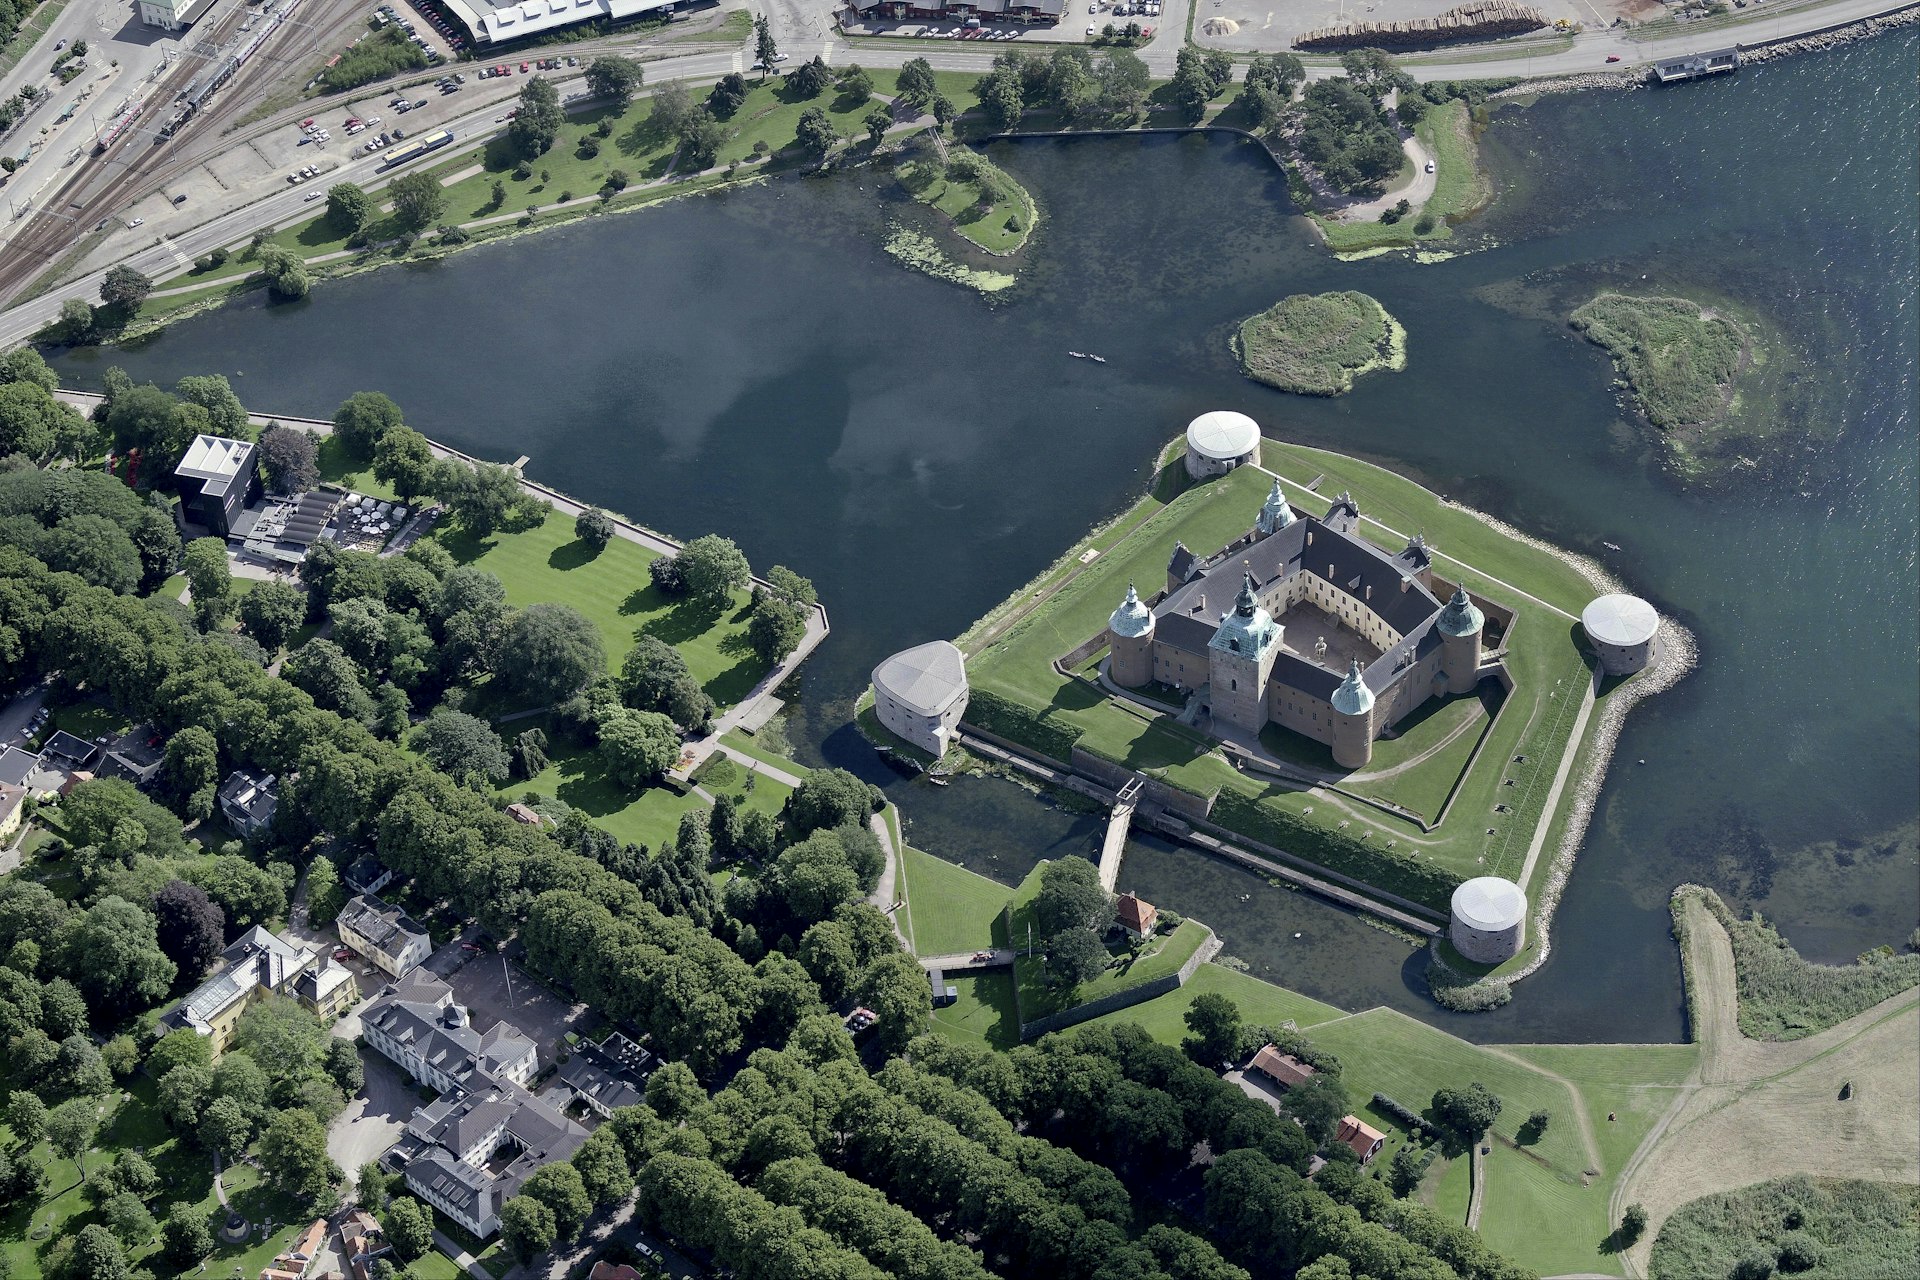 An aerial view of Kalmar Slott, a Renaissance castle in an island in Sweden